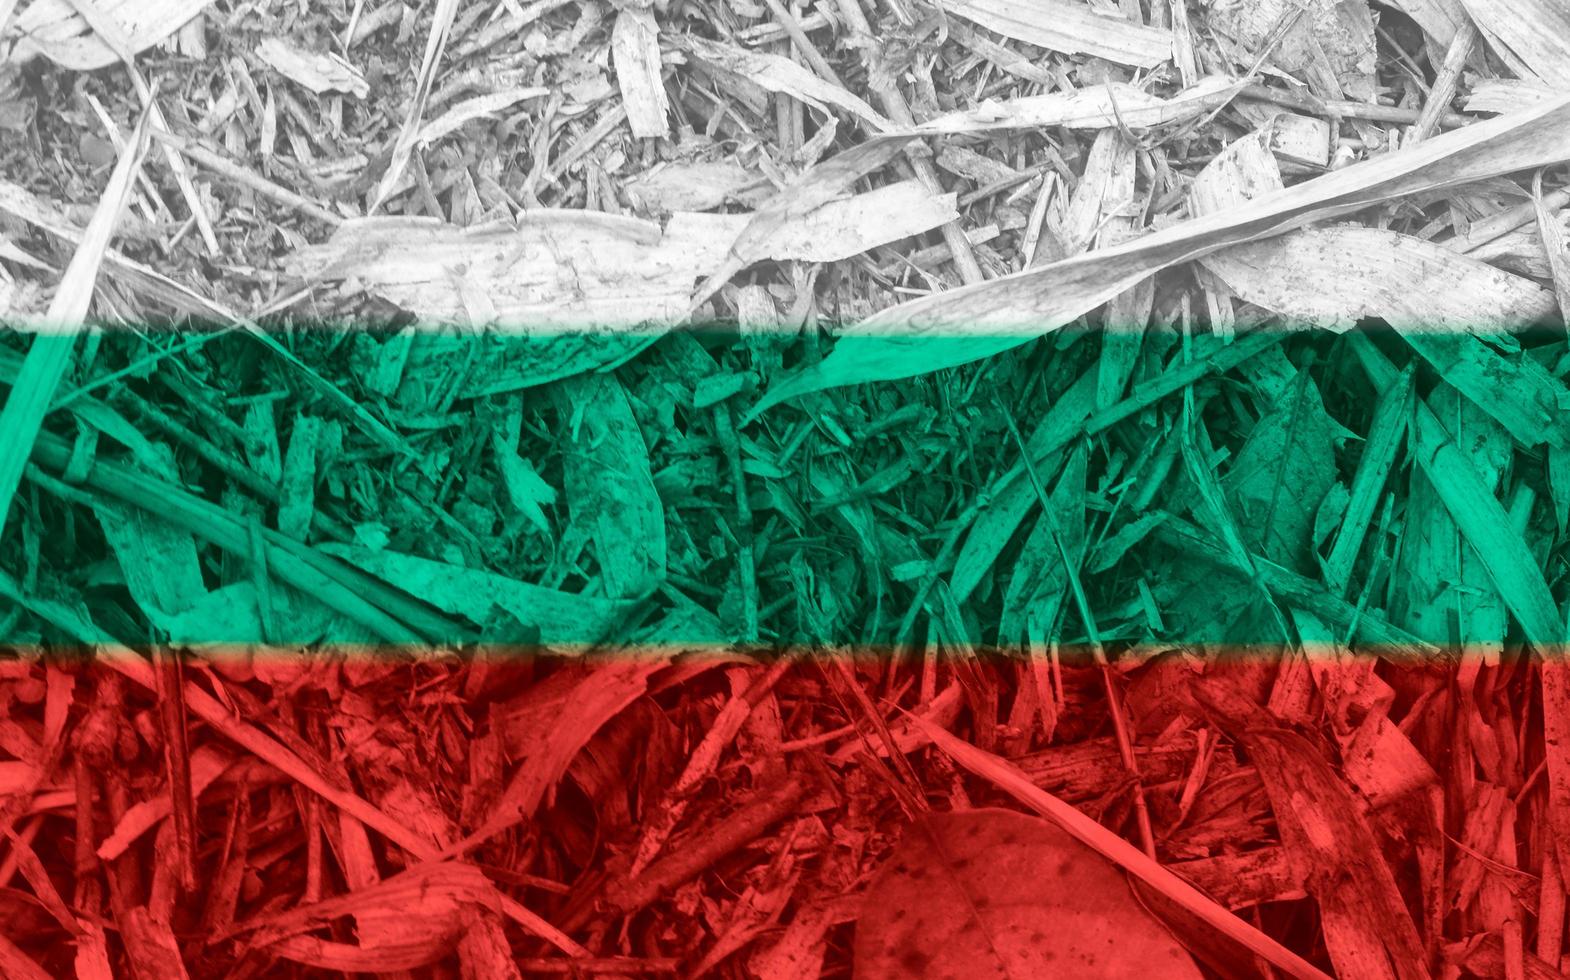 Bulgarian flag texture as a background photo